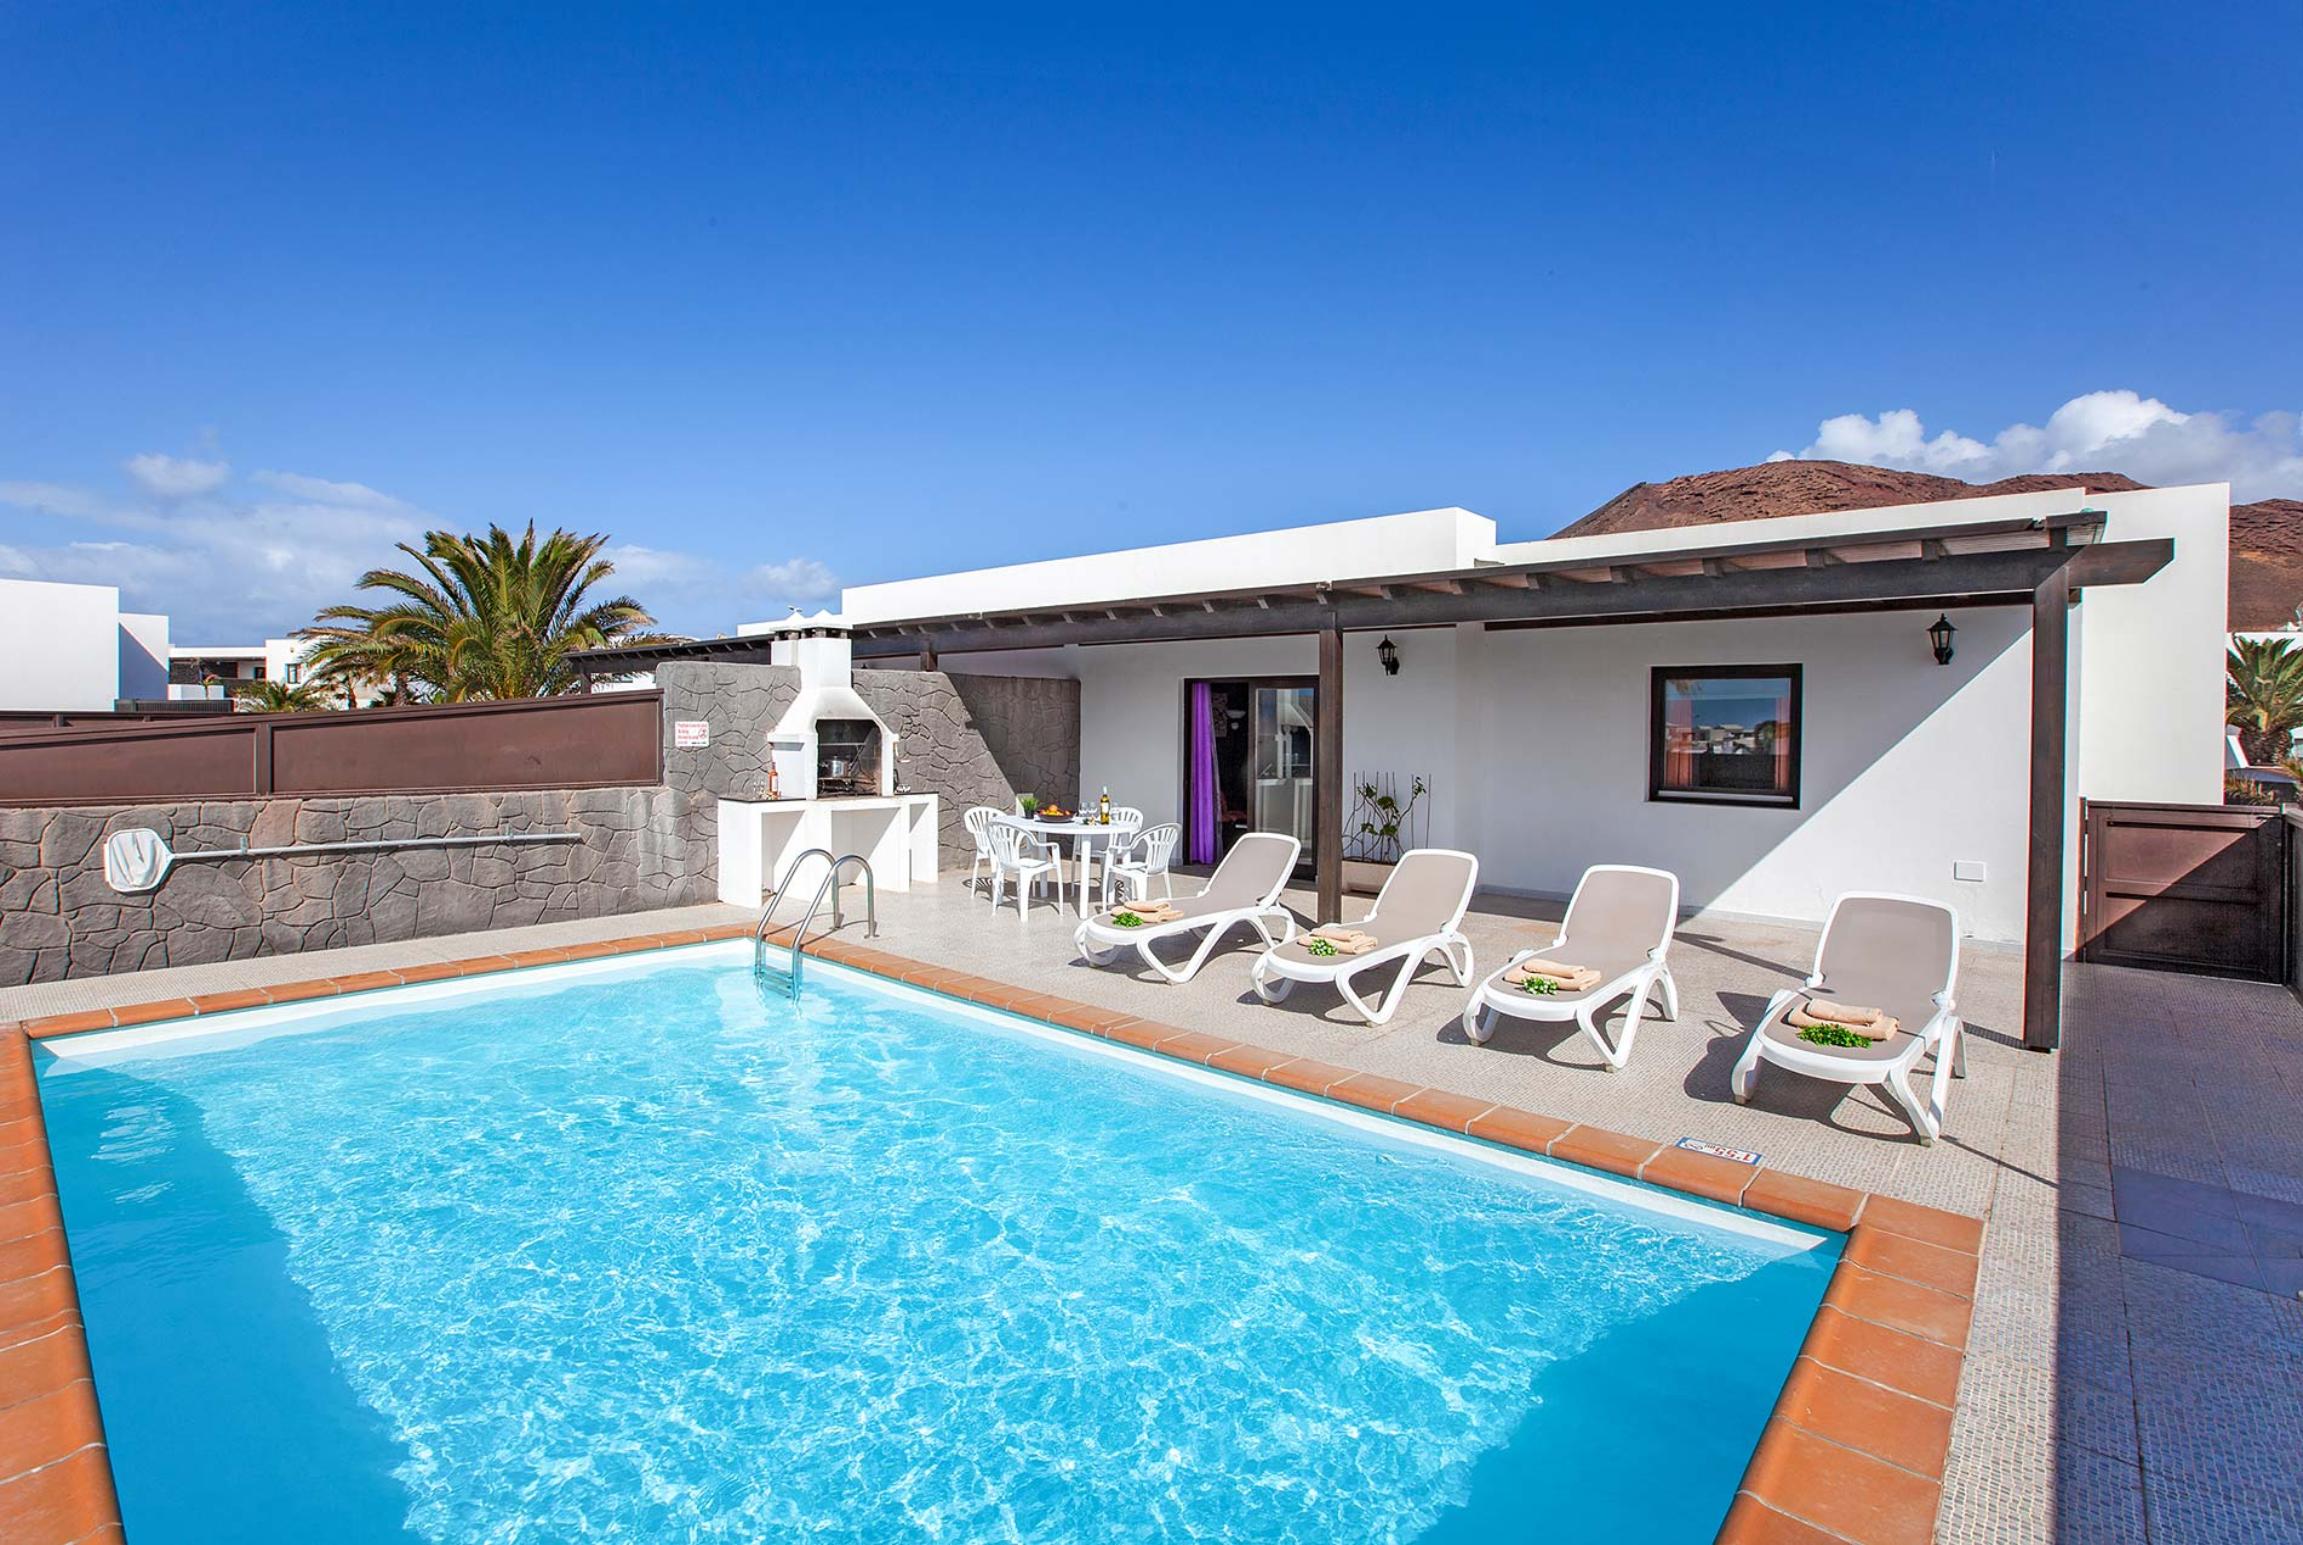 Property Image 1 - 2 bedroom Villa near Playa Blanca, w/pool and BBQ